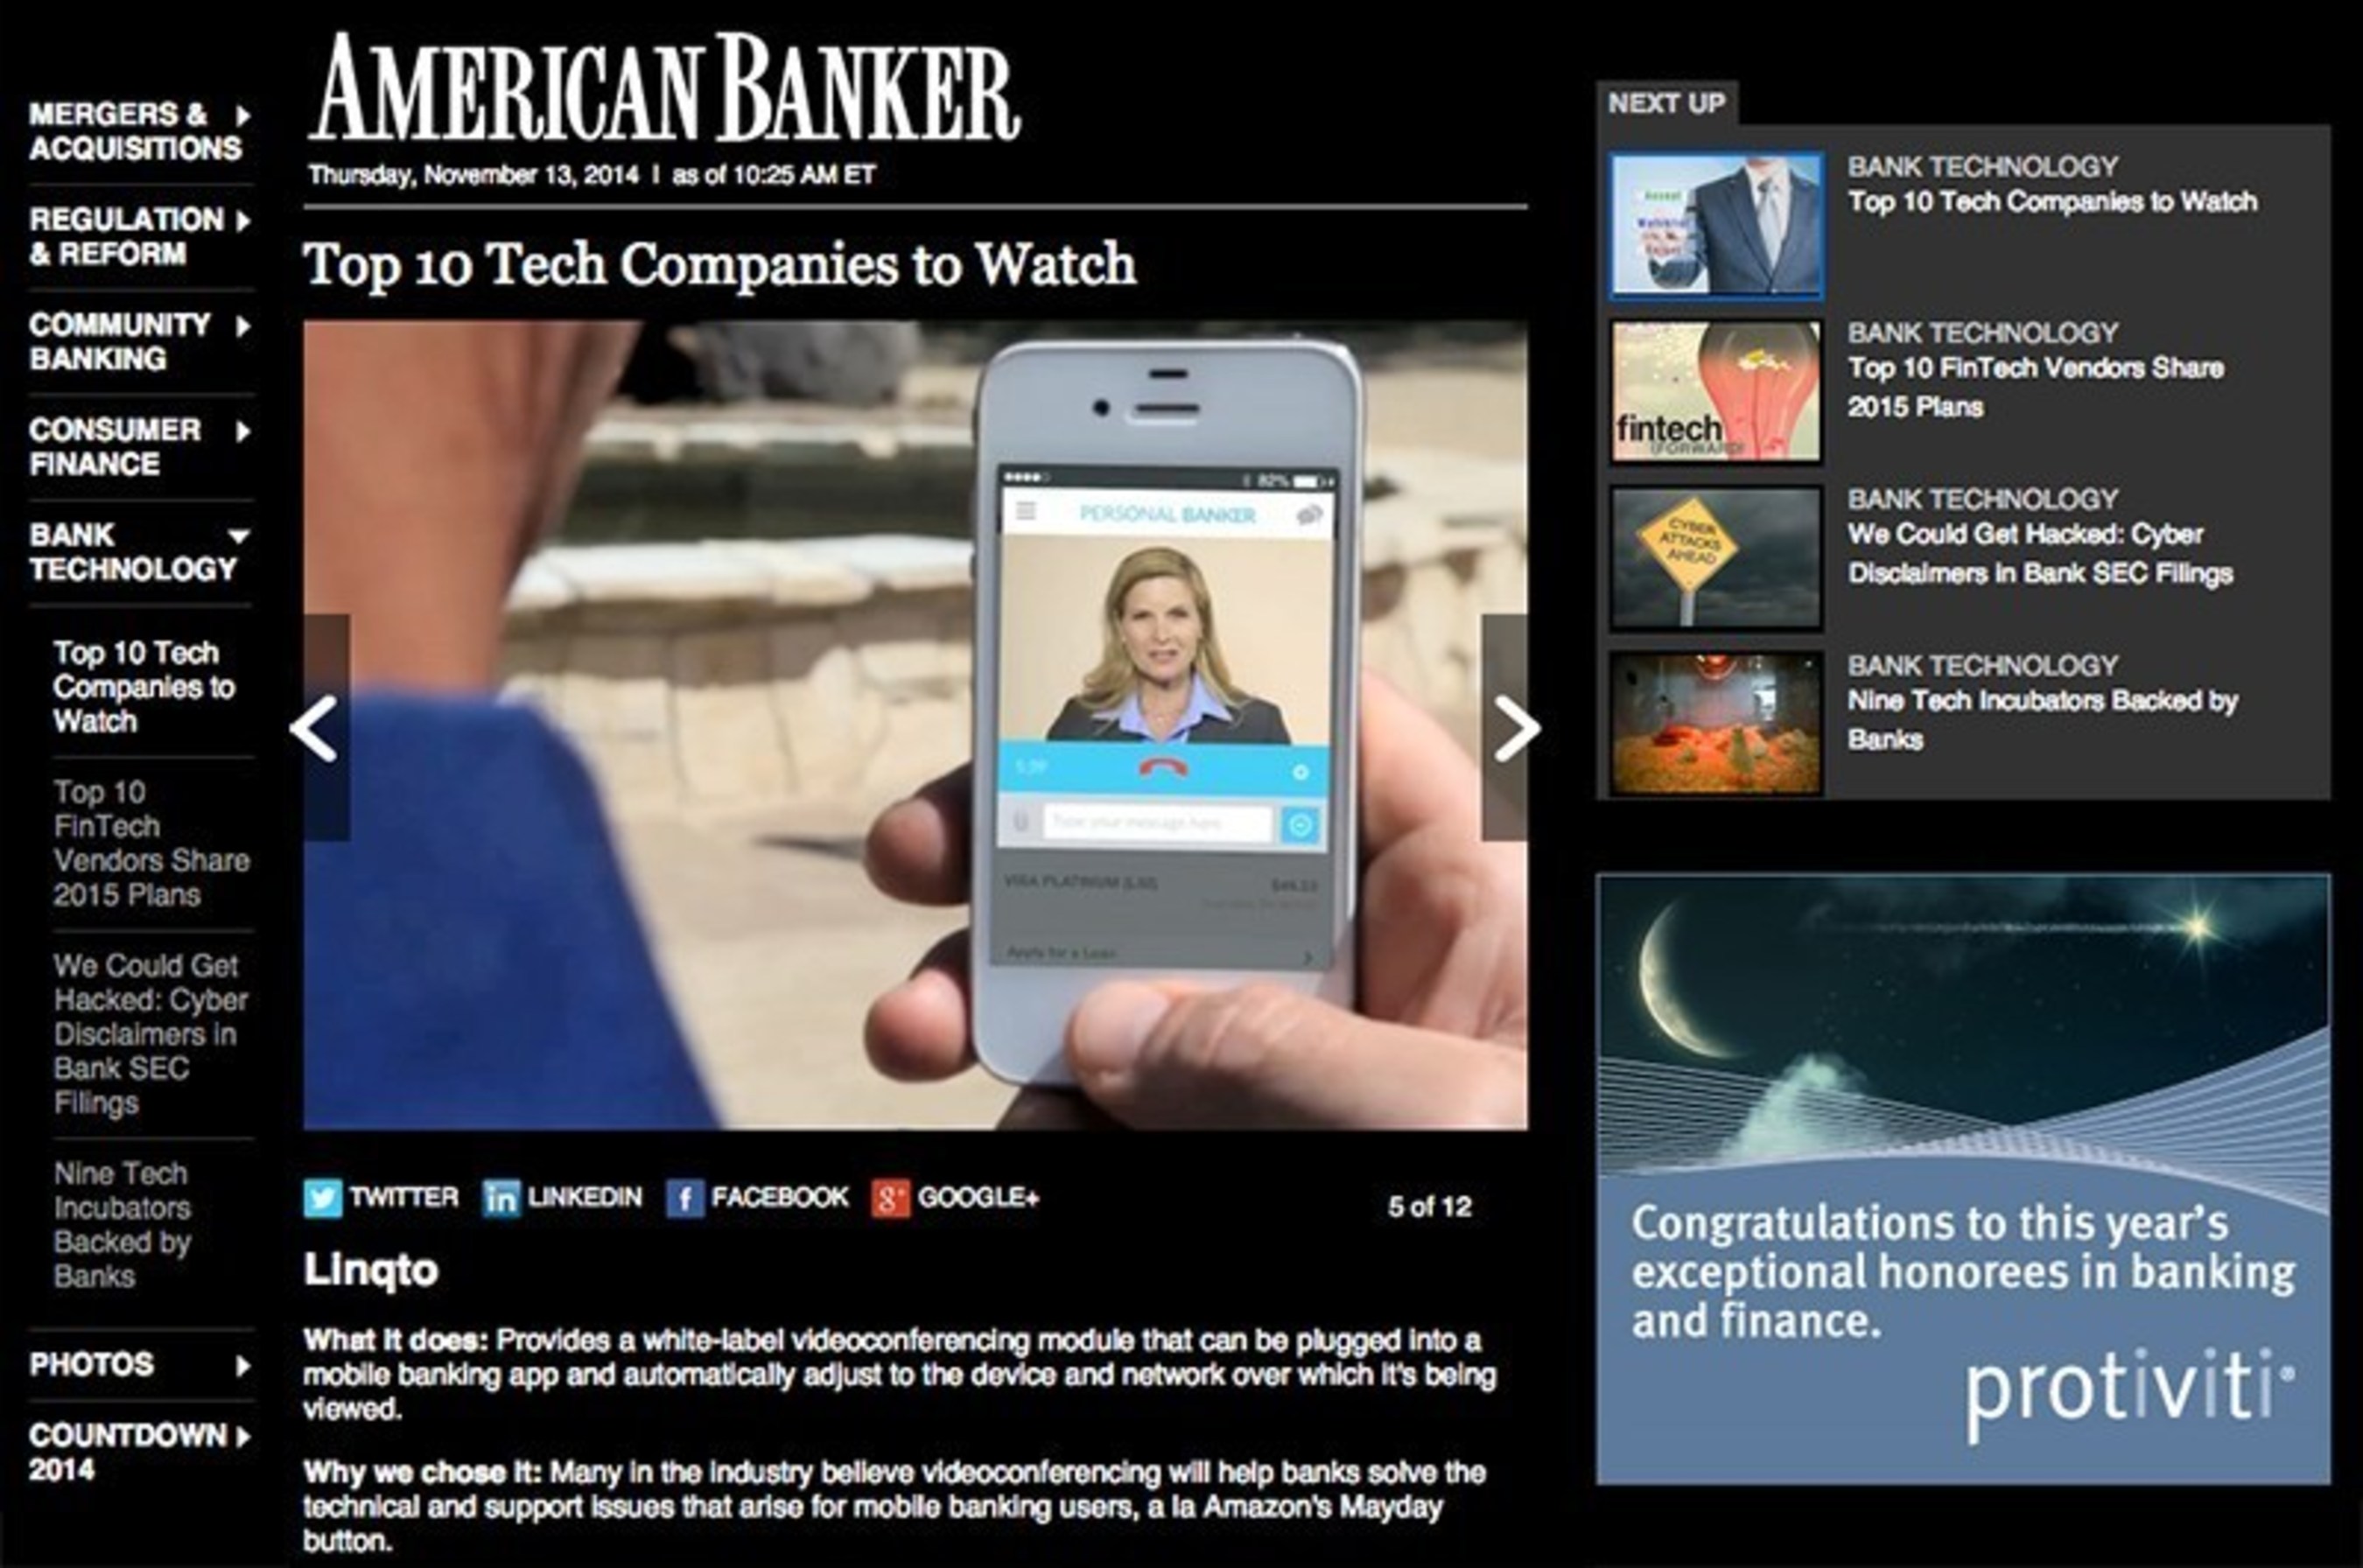 American Banker names Linqto a Top Ten Tech Company to Watch